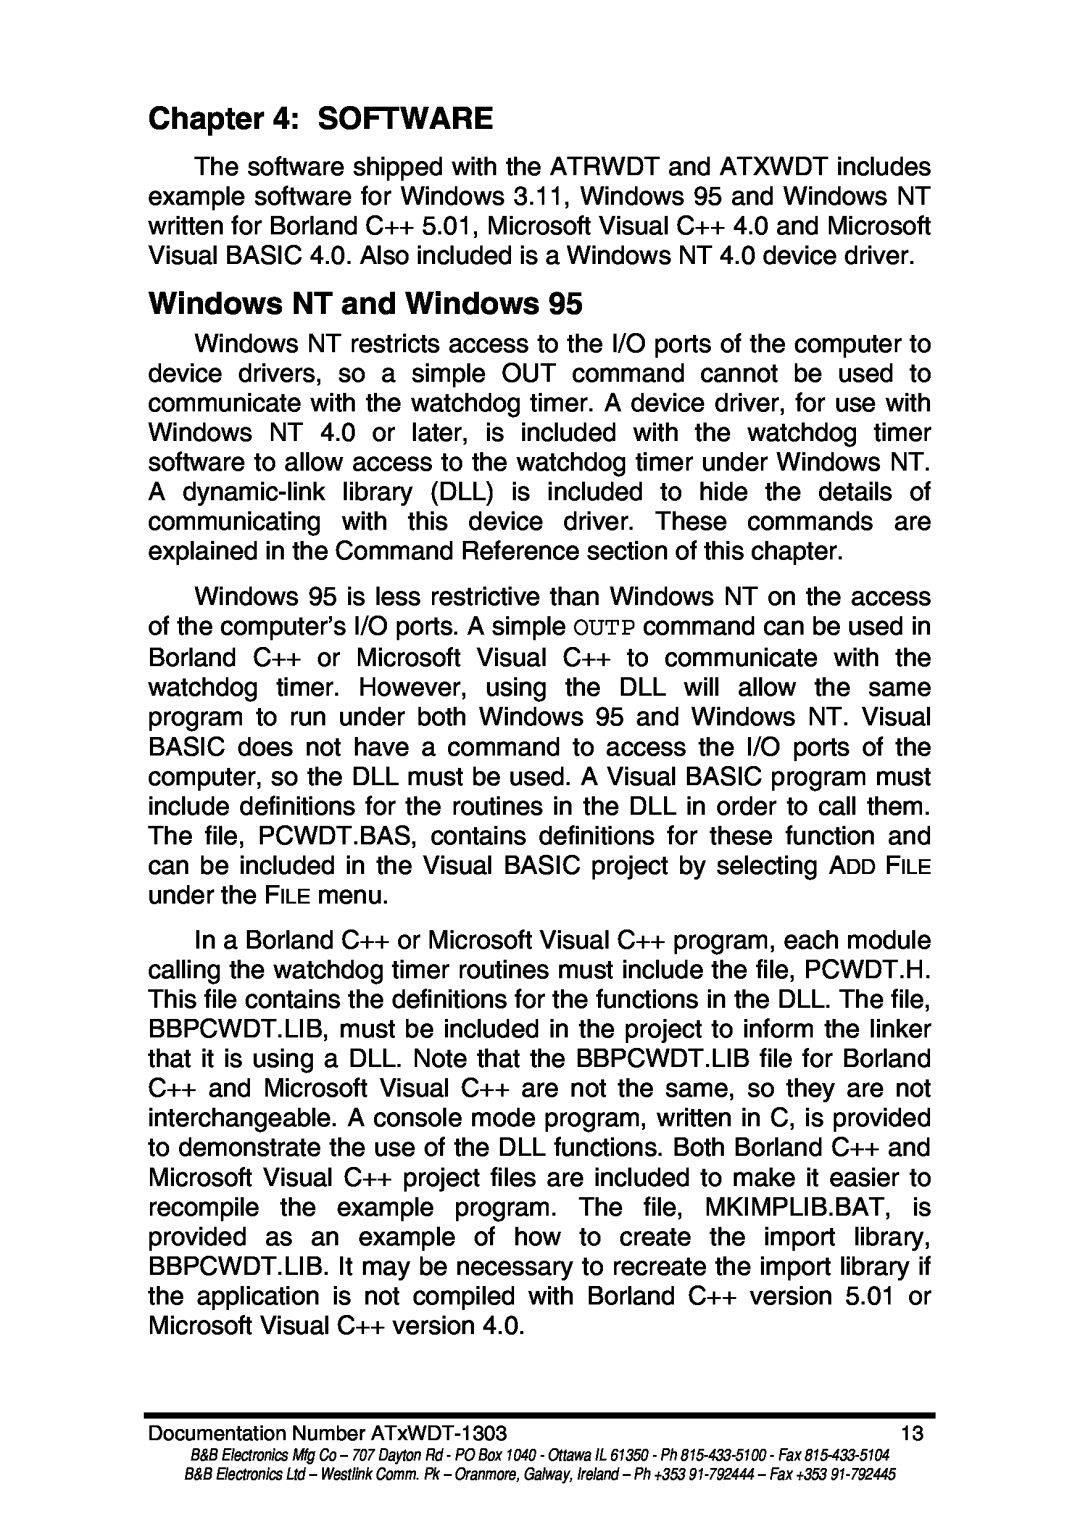 B&B Electronics ATXWDT, ATRWDT manual Software, Windows NT and Windows 